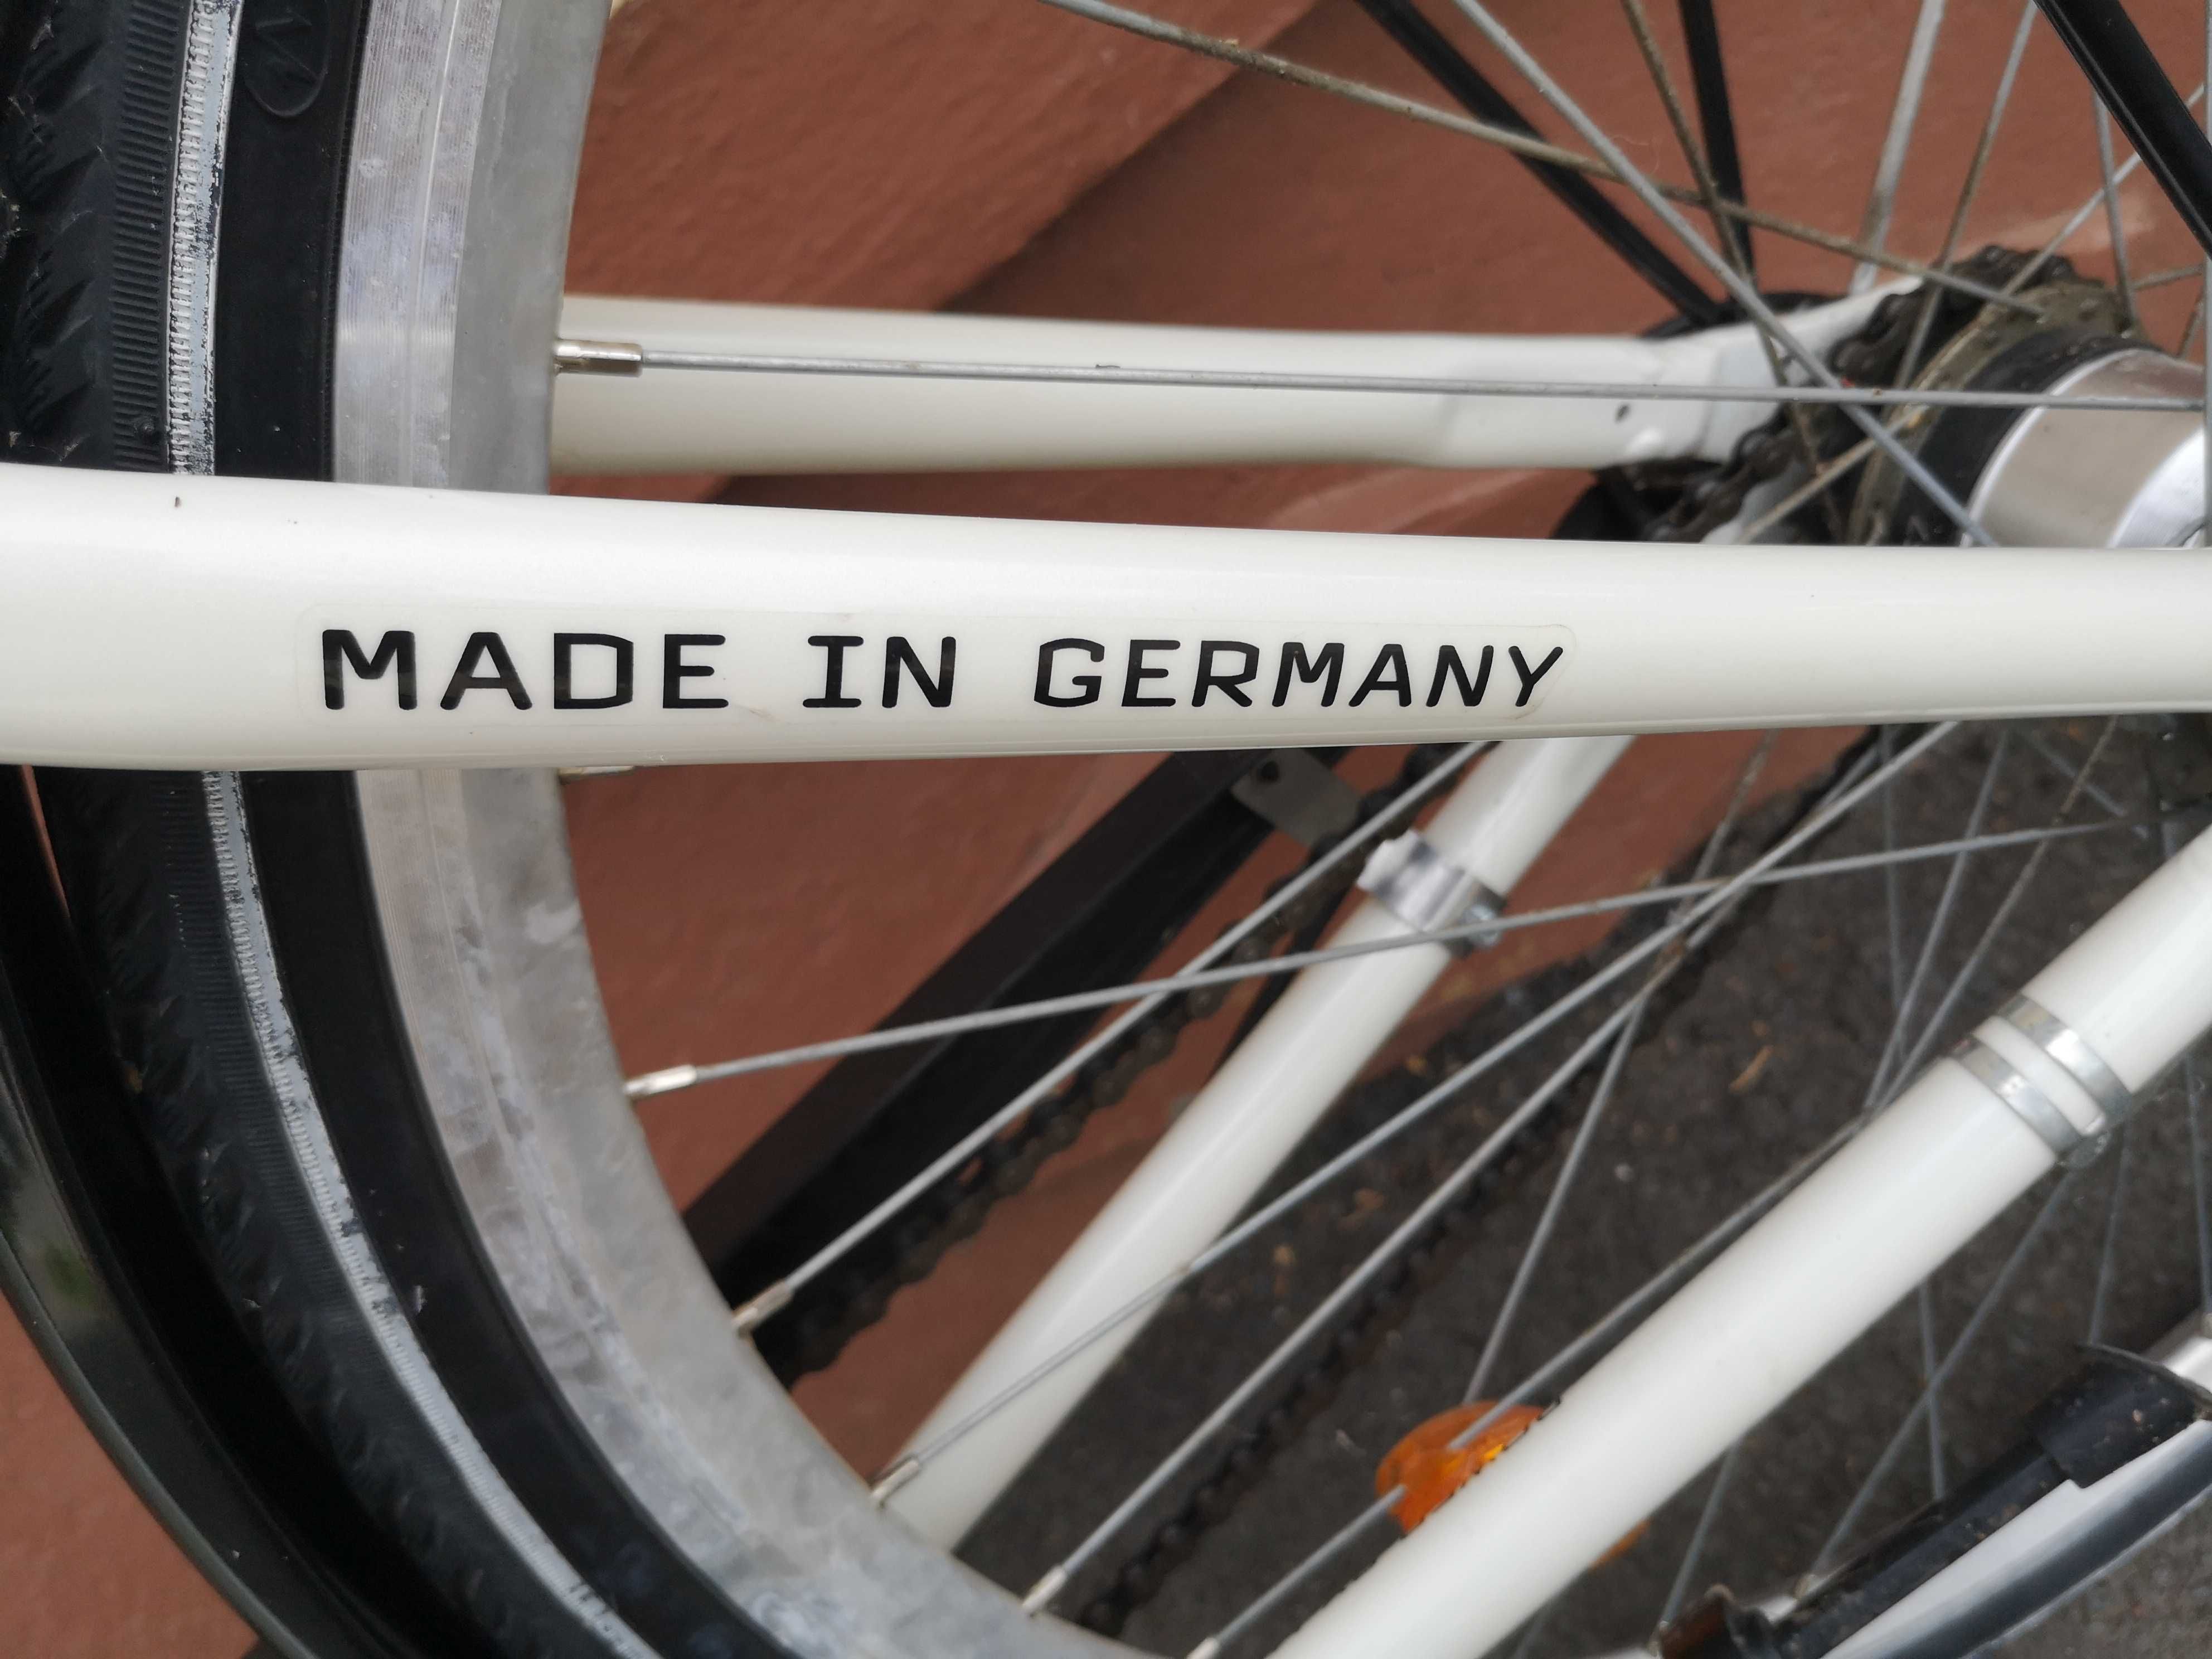 Bicicletă damă Made în Germany